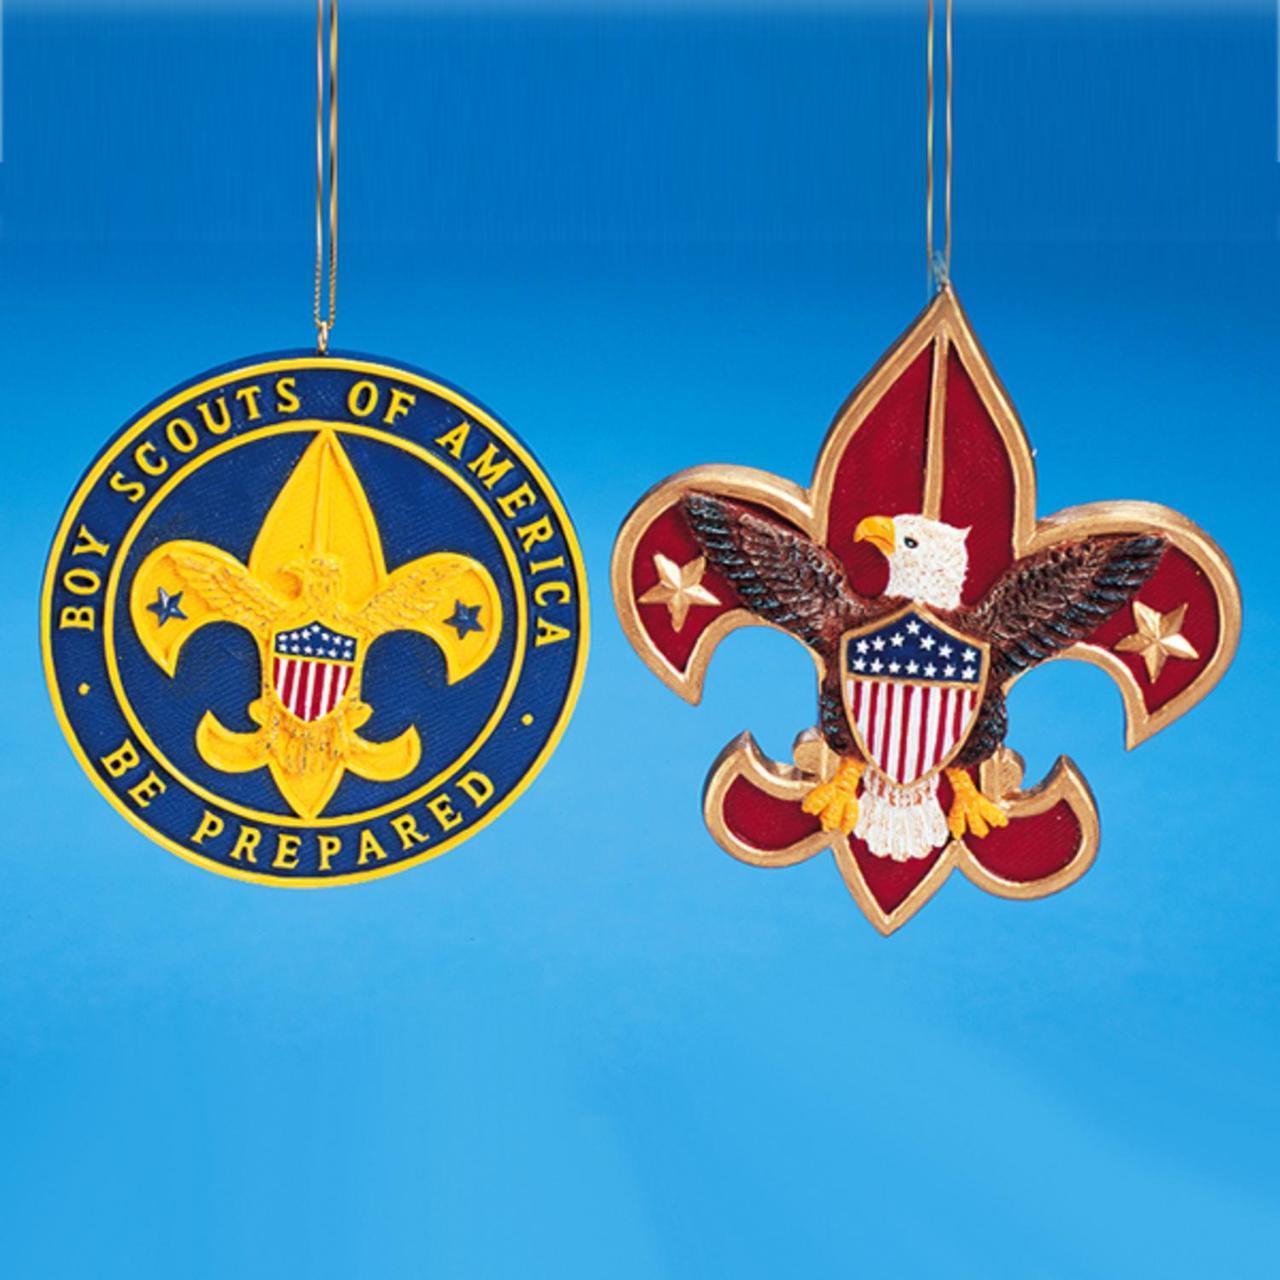 Christmas Eagle Logo - Club Pack of 12 Boy Scout & Eagle Scouts Emblem Christmas Ornaments ...